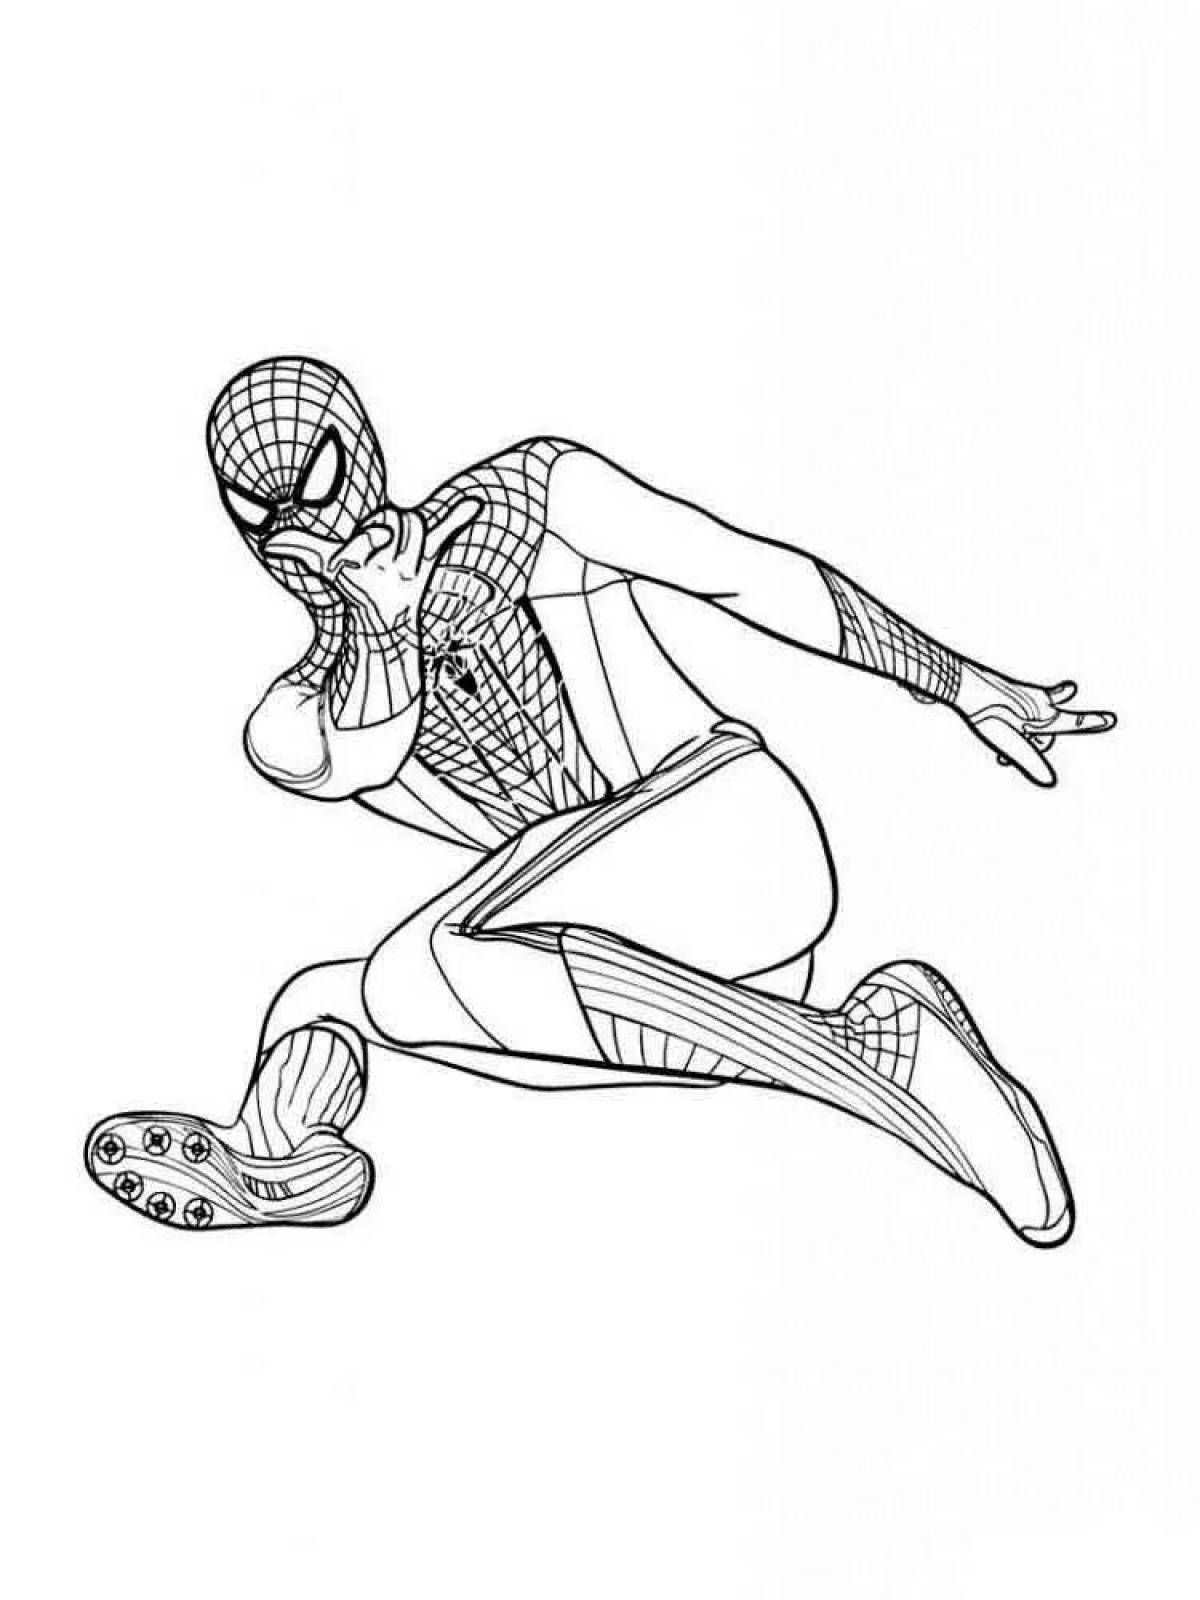 New spiderman #4